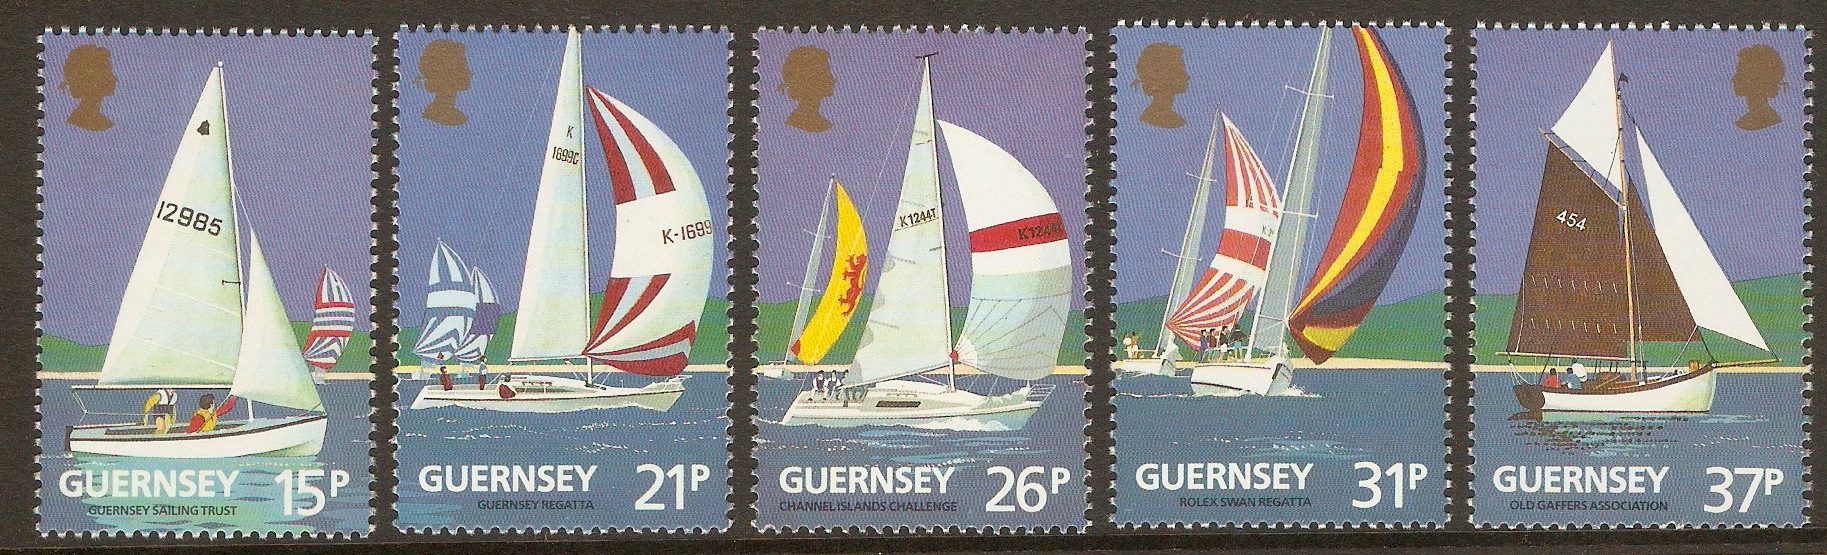 Guernsey 1991 Yacht Club Anniversary set. SG524-SG528.